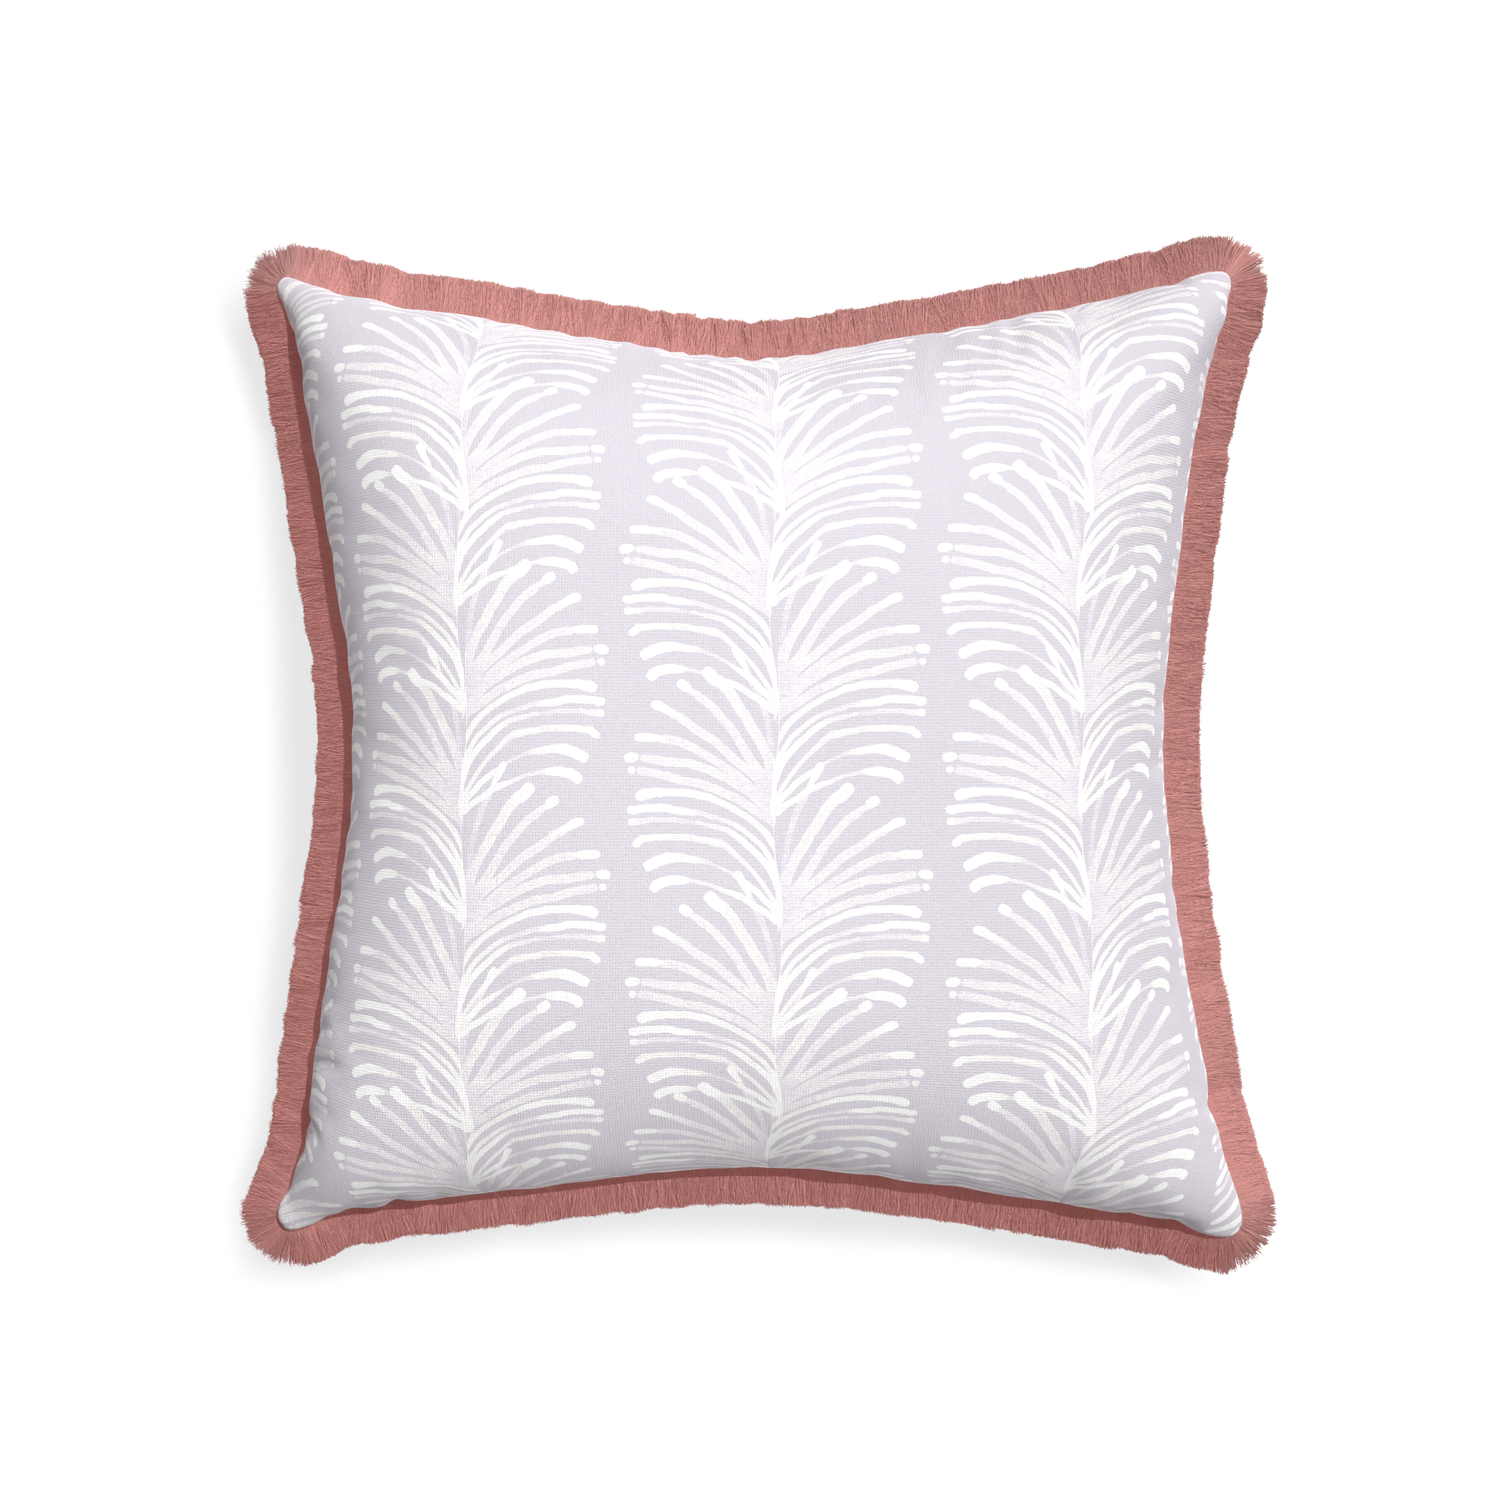 22-square emma lavender custom pillow with d fringe on white background